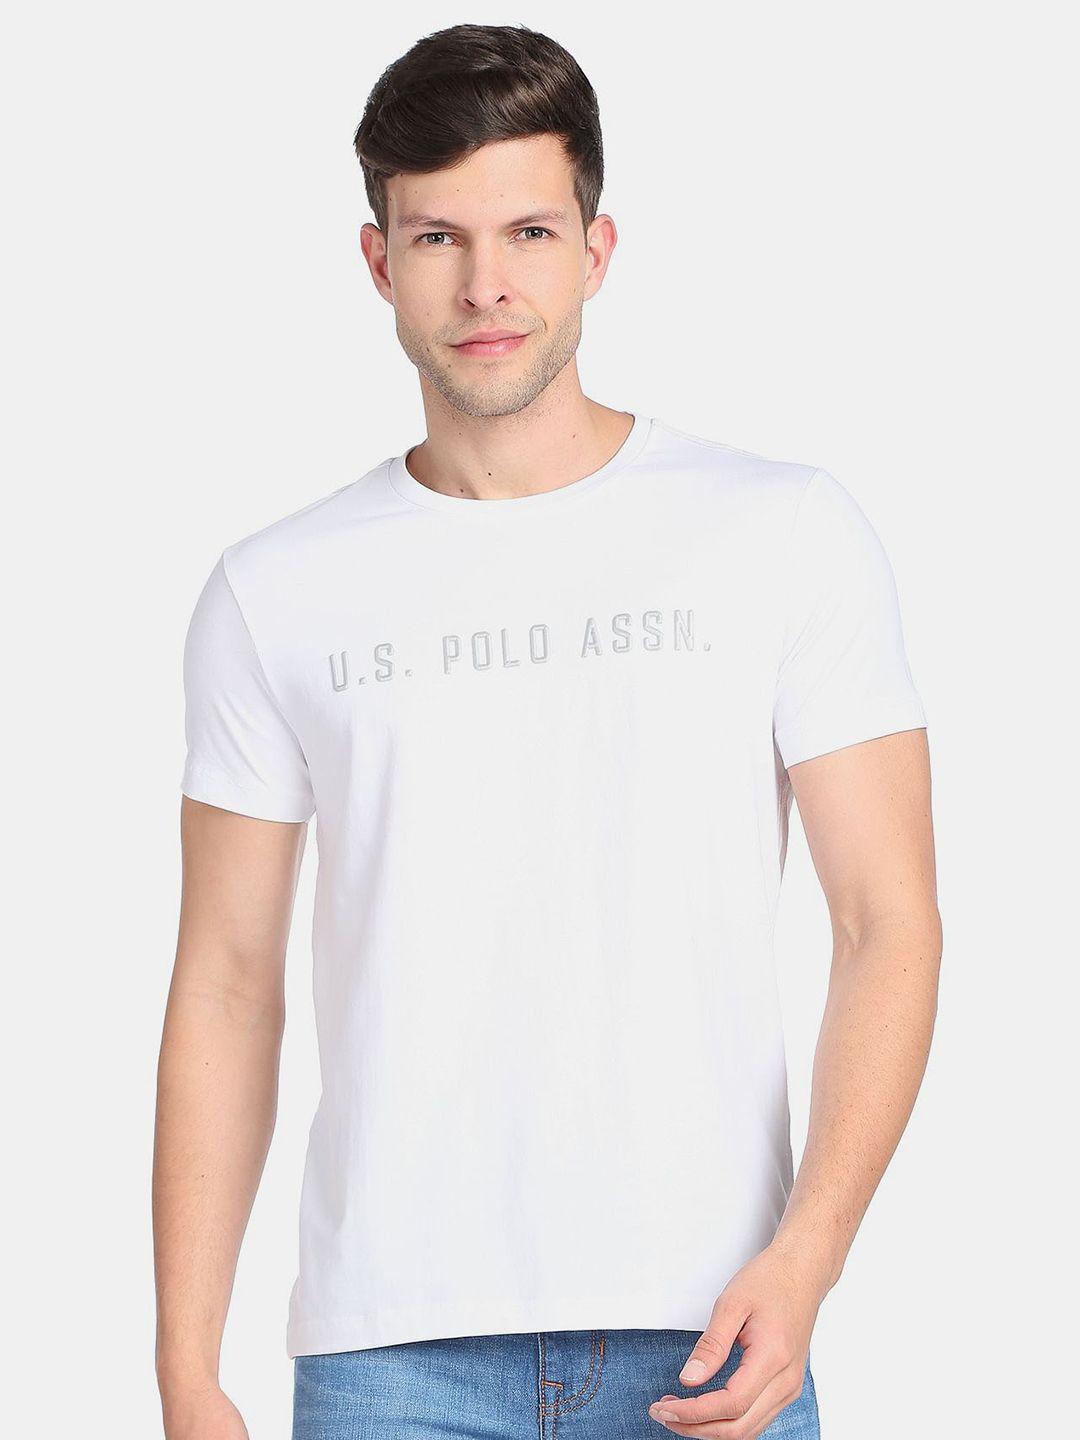 u.s. polo assn. denim co. men slim fit t-shirt